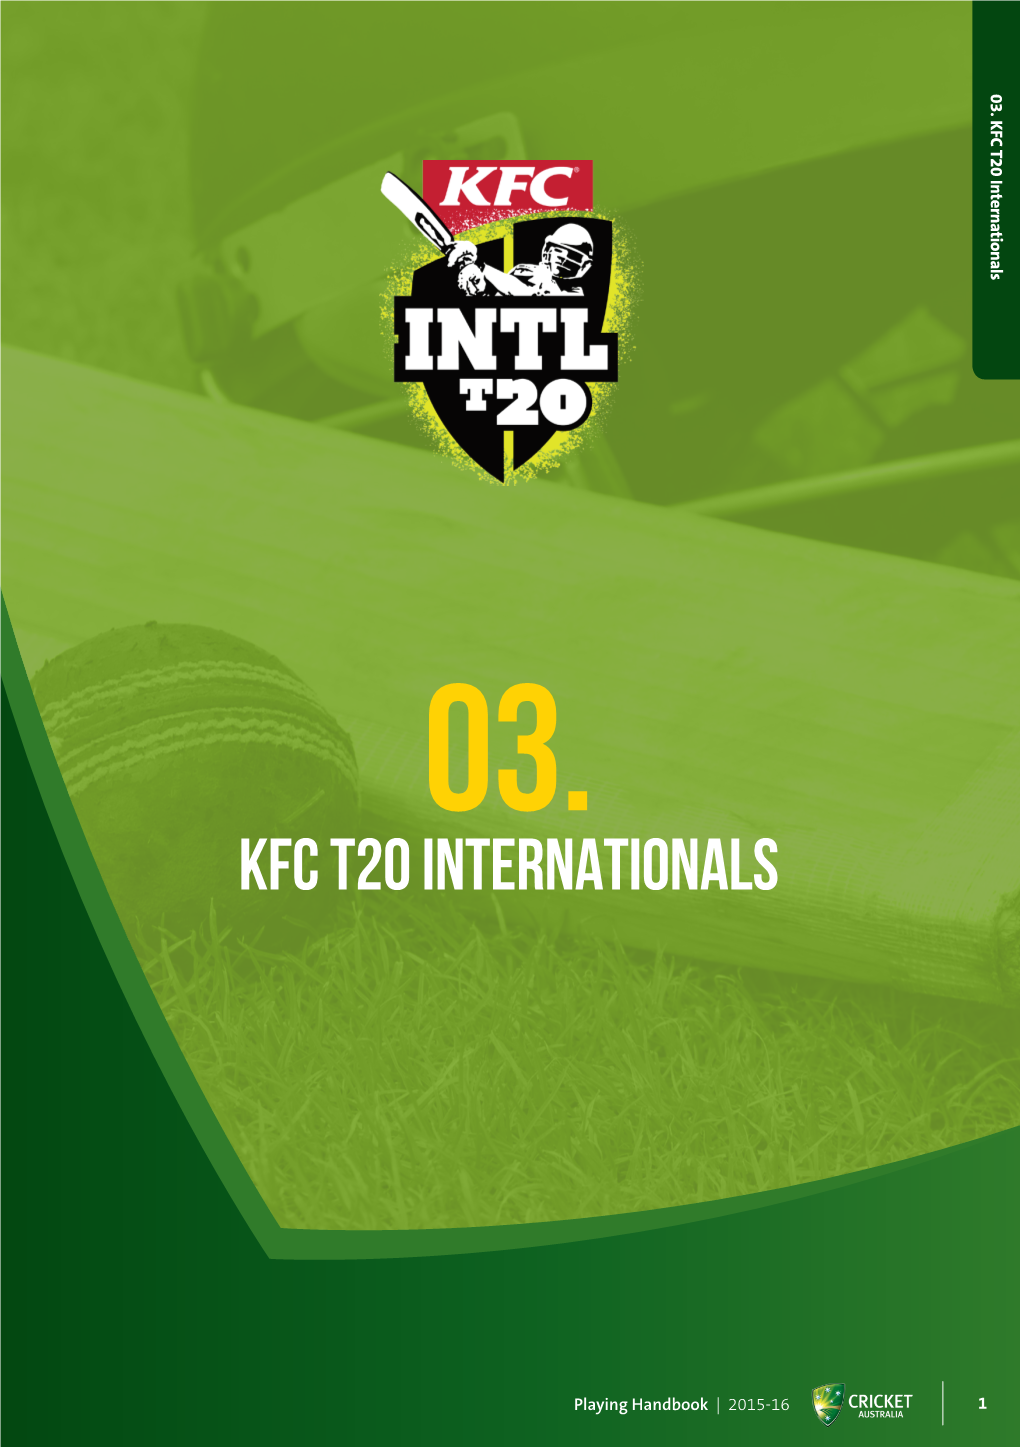 KFC T20 Internationals